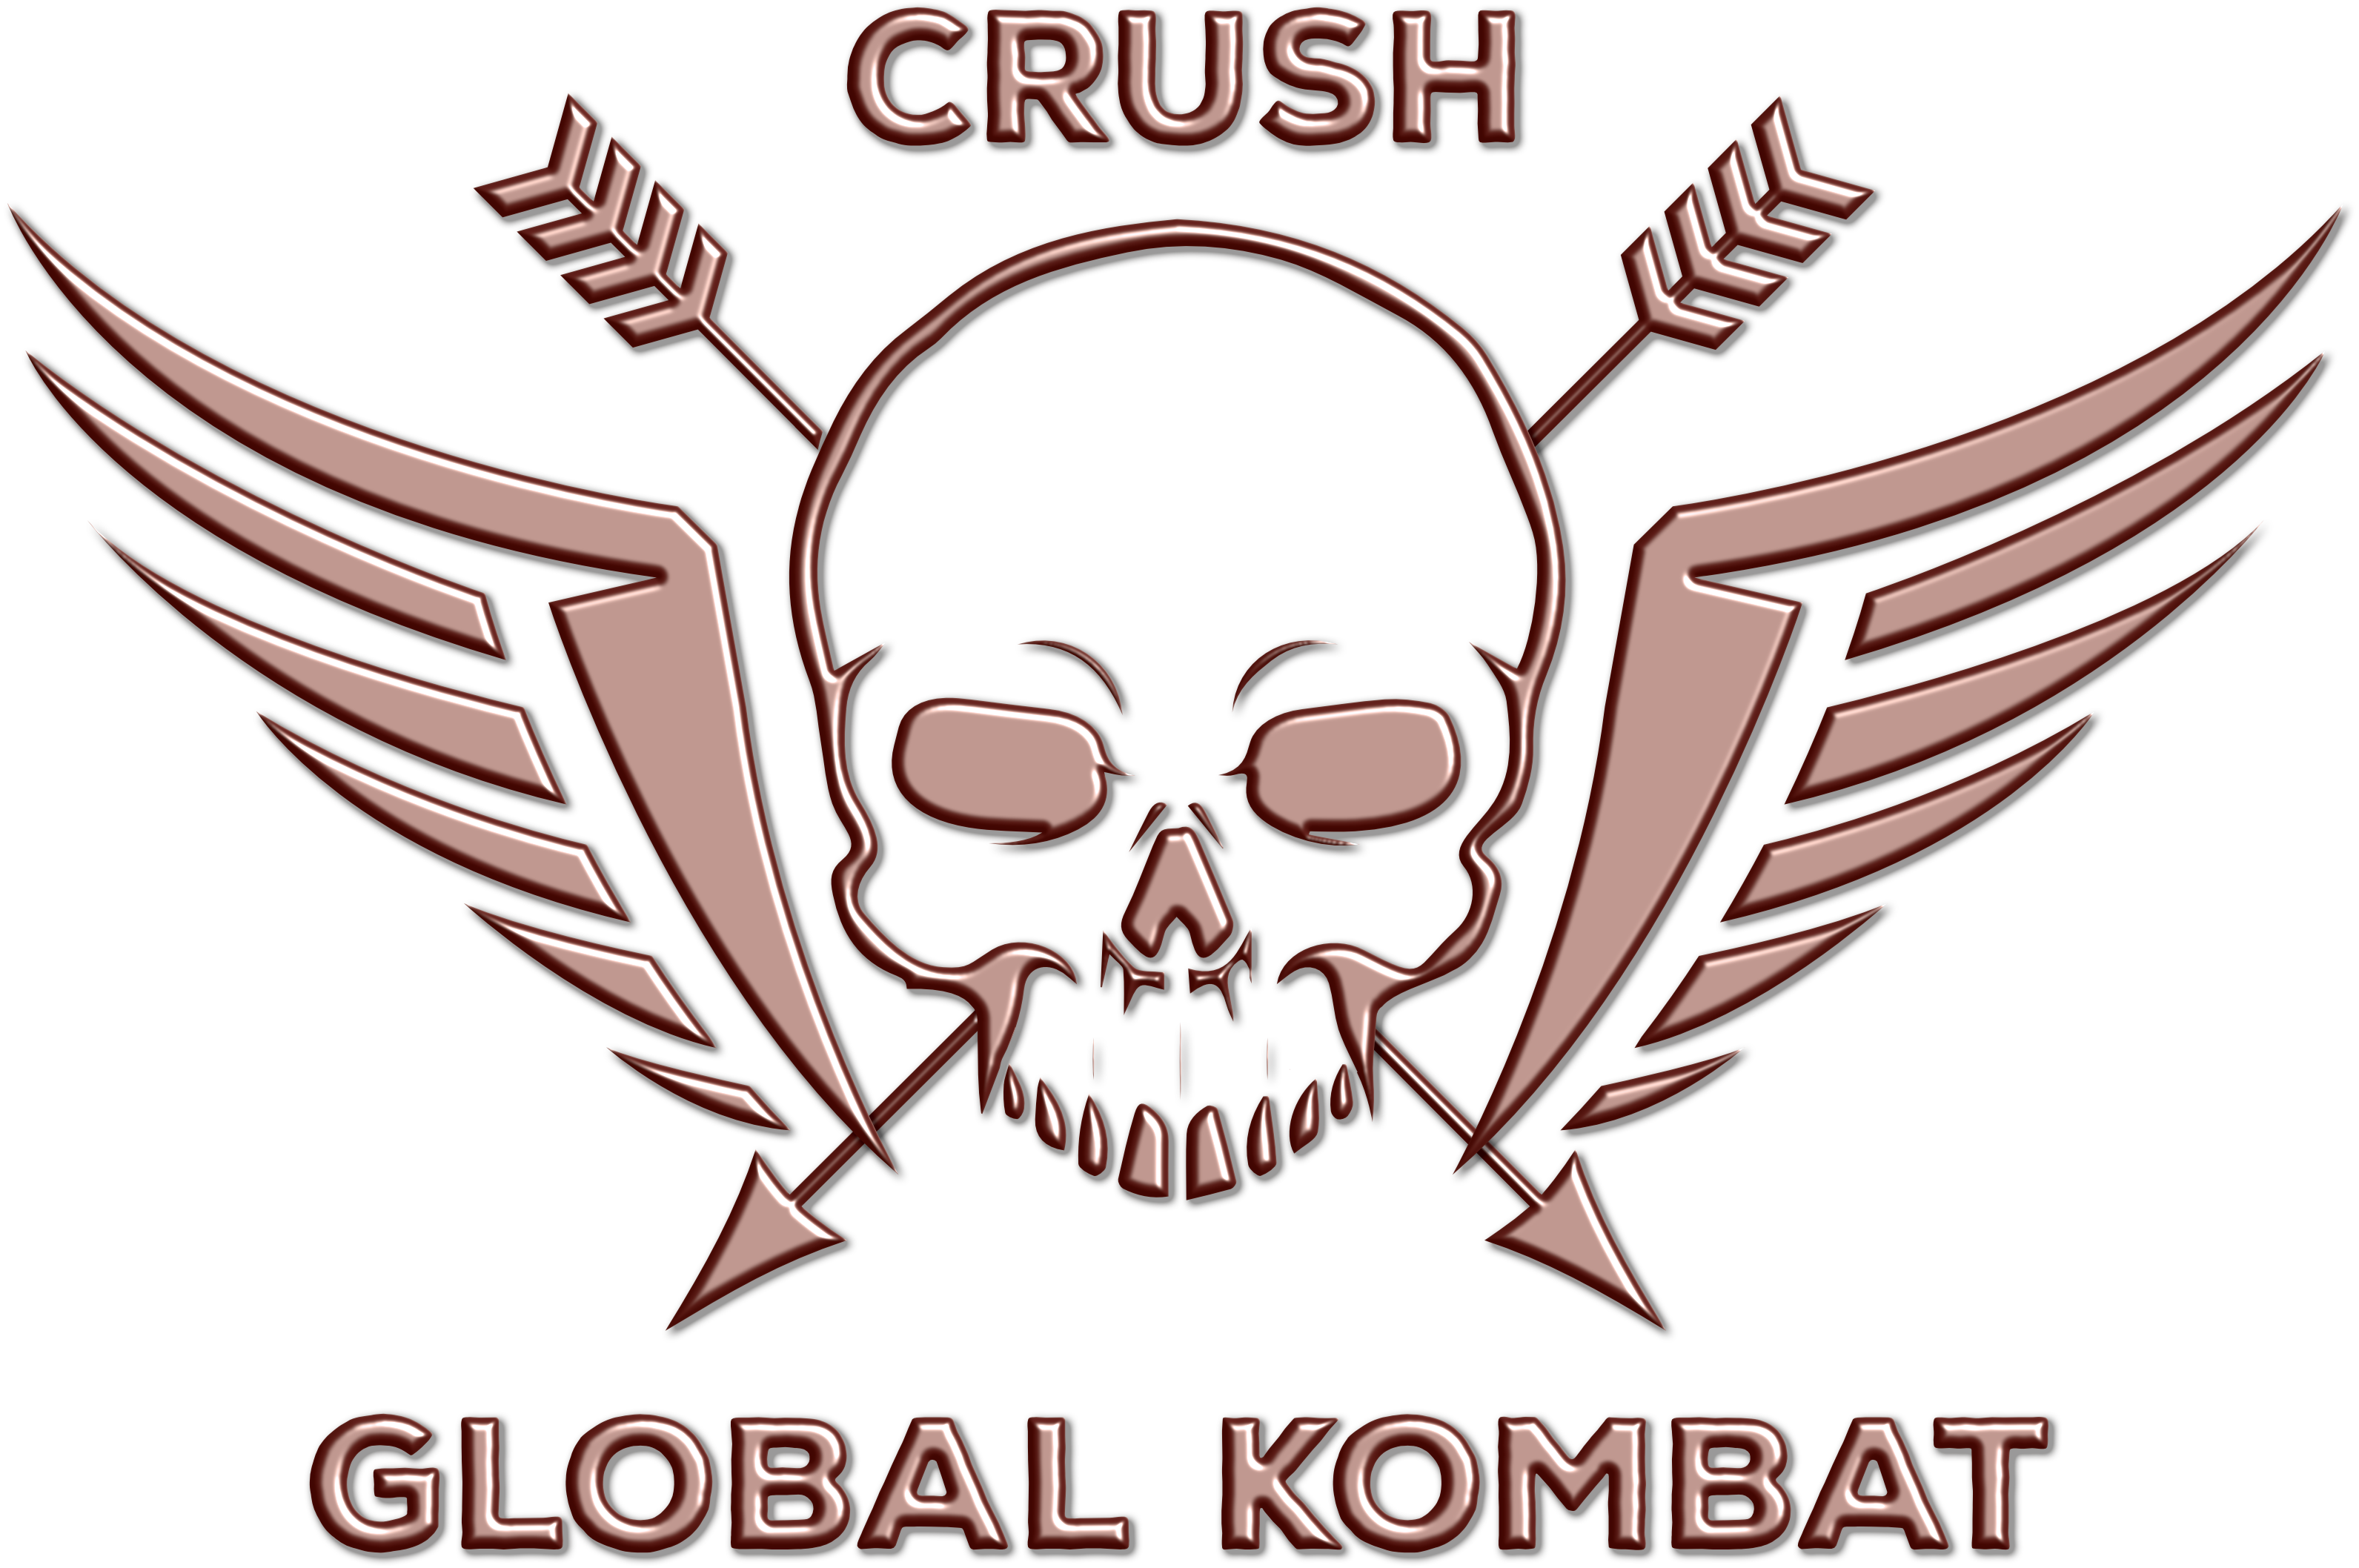 Crush Global Kombat